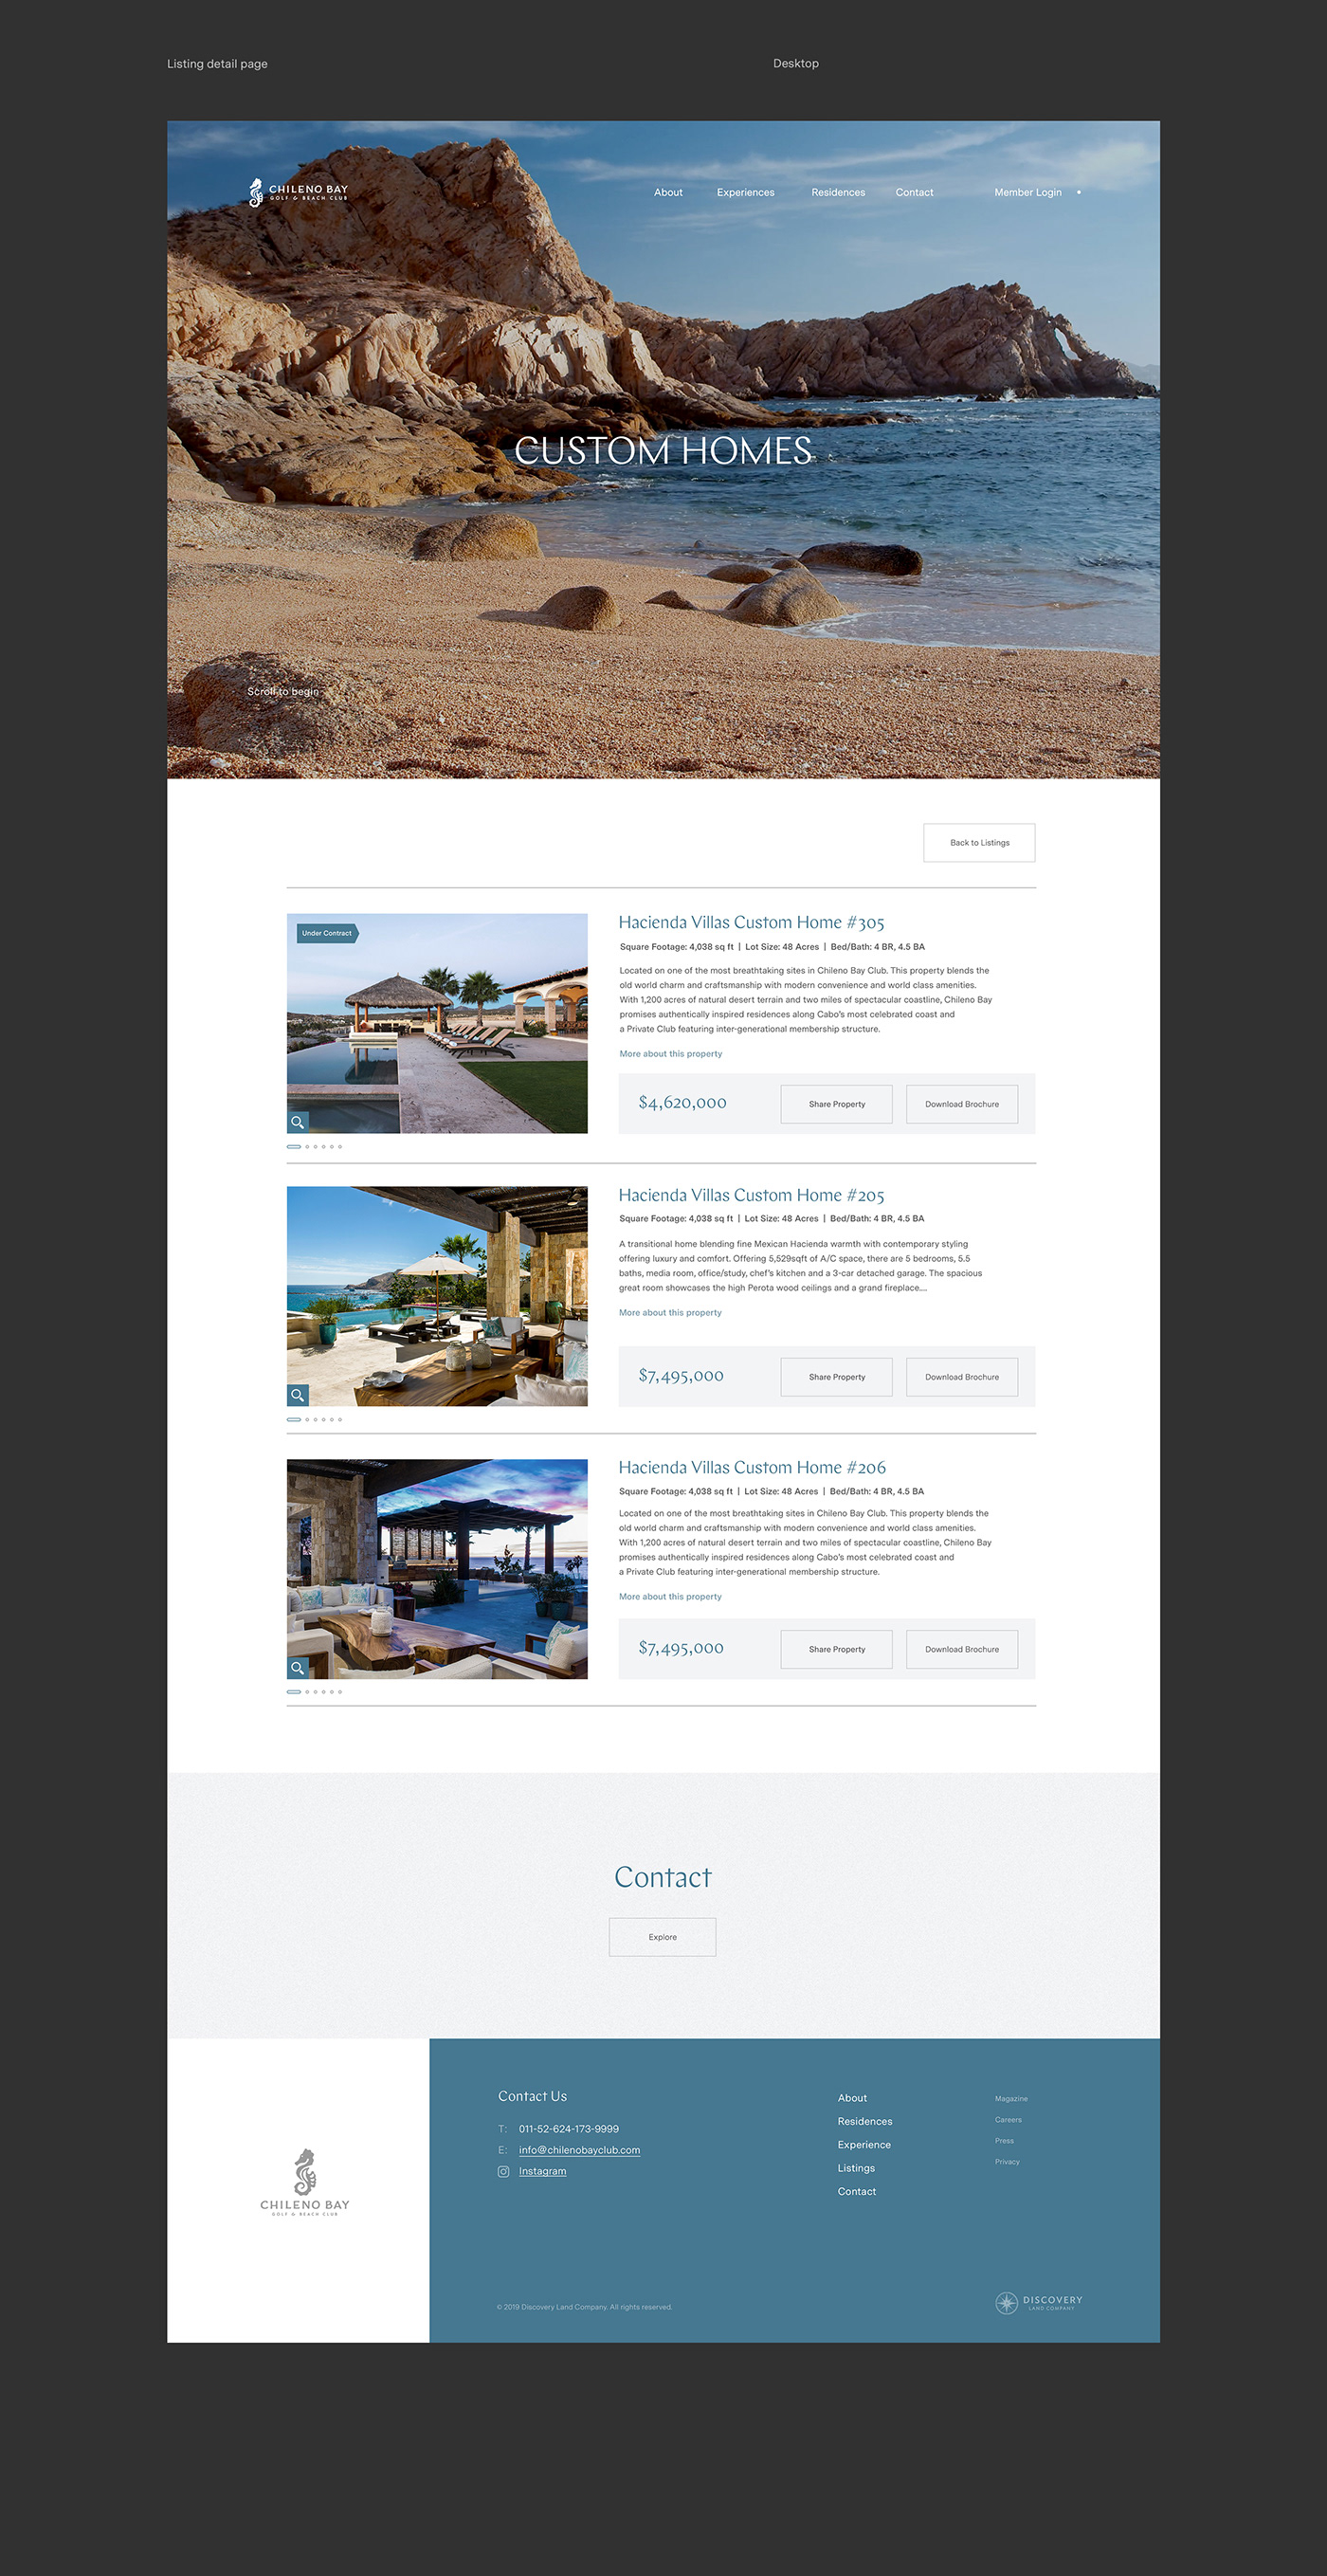 design real estate UI ux Web Design  interactive hotel luxury resort Travel